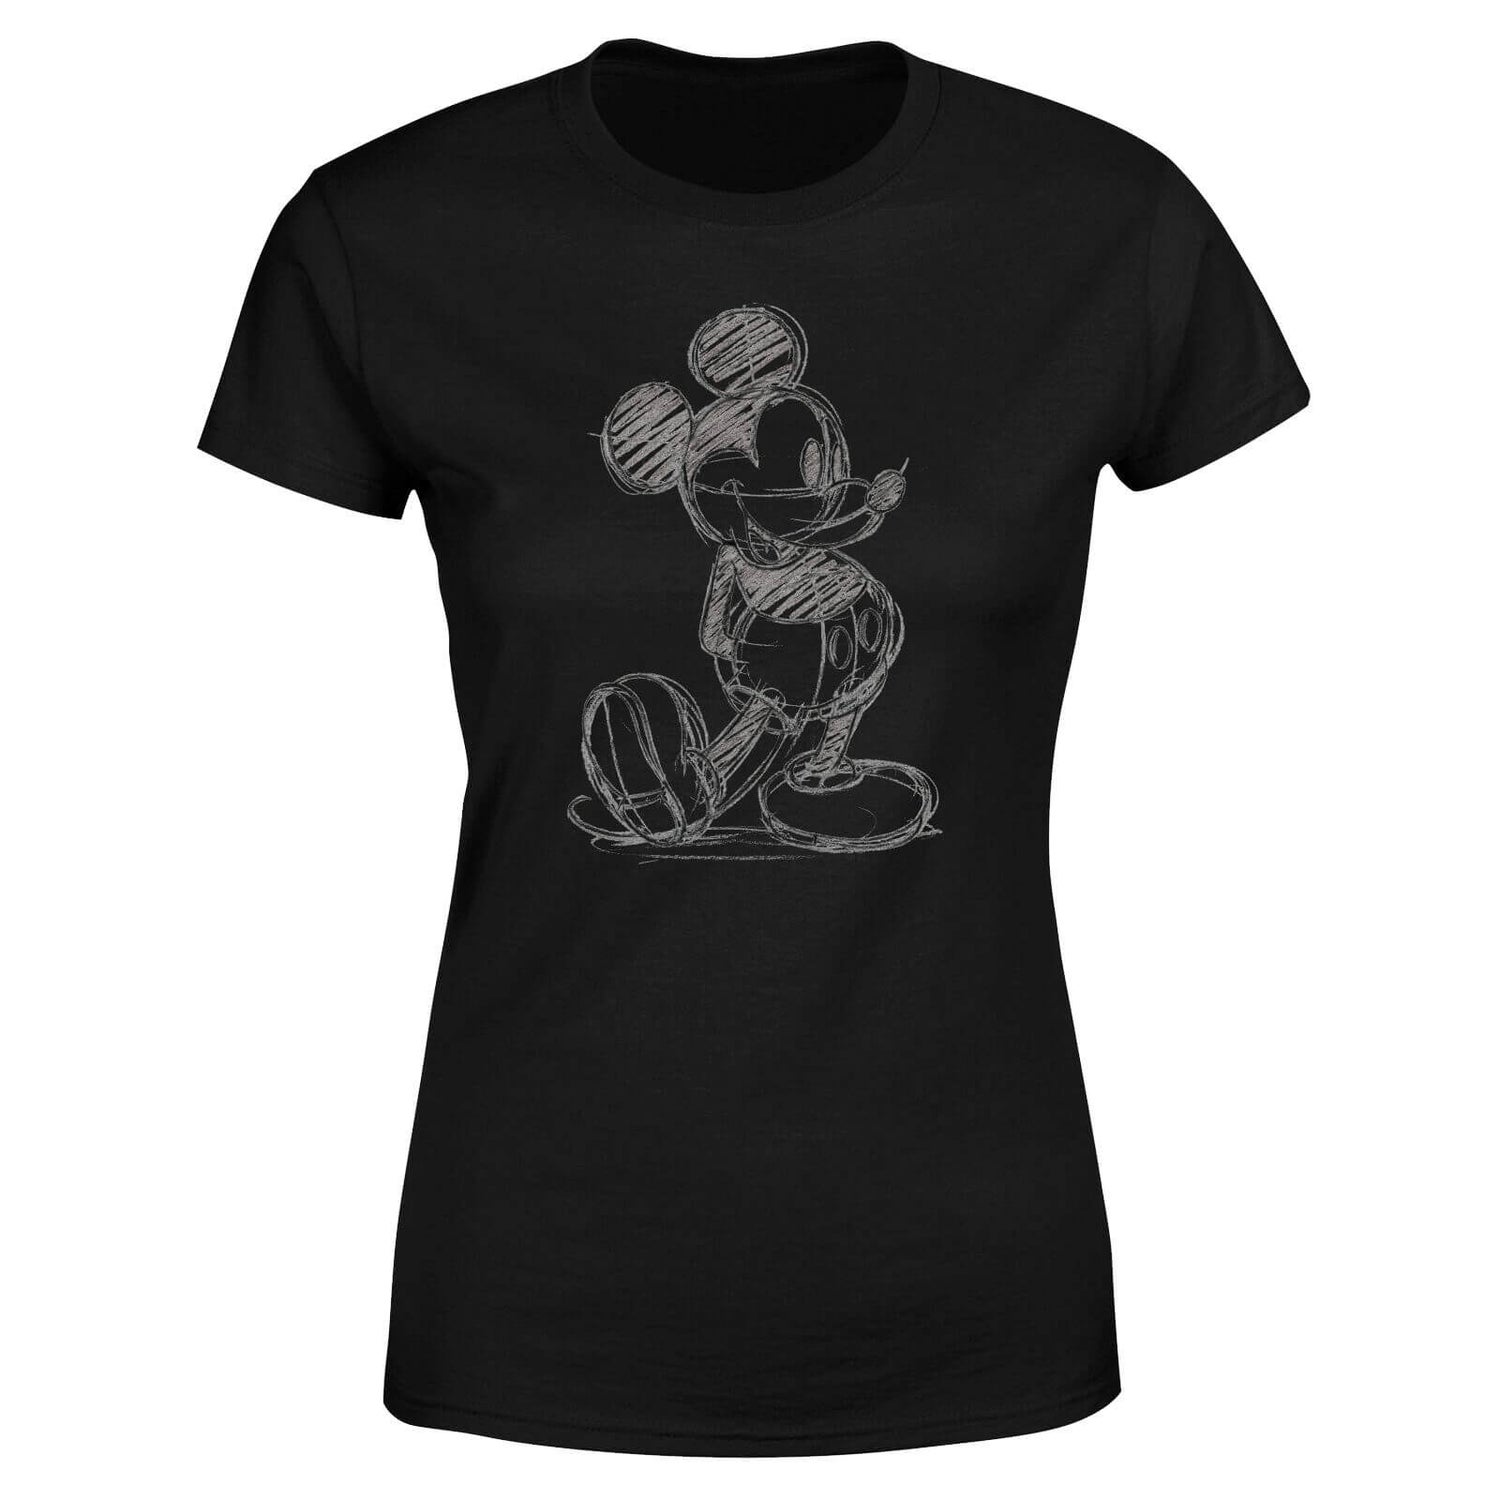 Disney Mickey Mouse Sketch Women's T-Shirt - Black